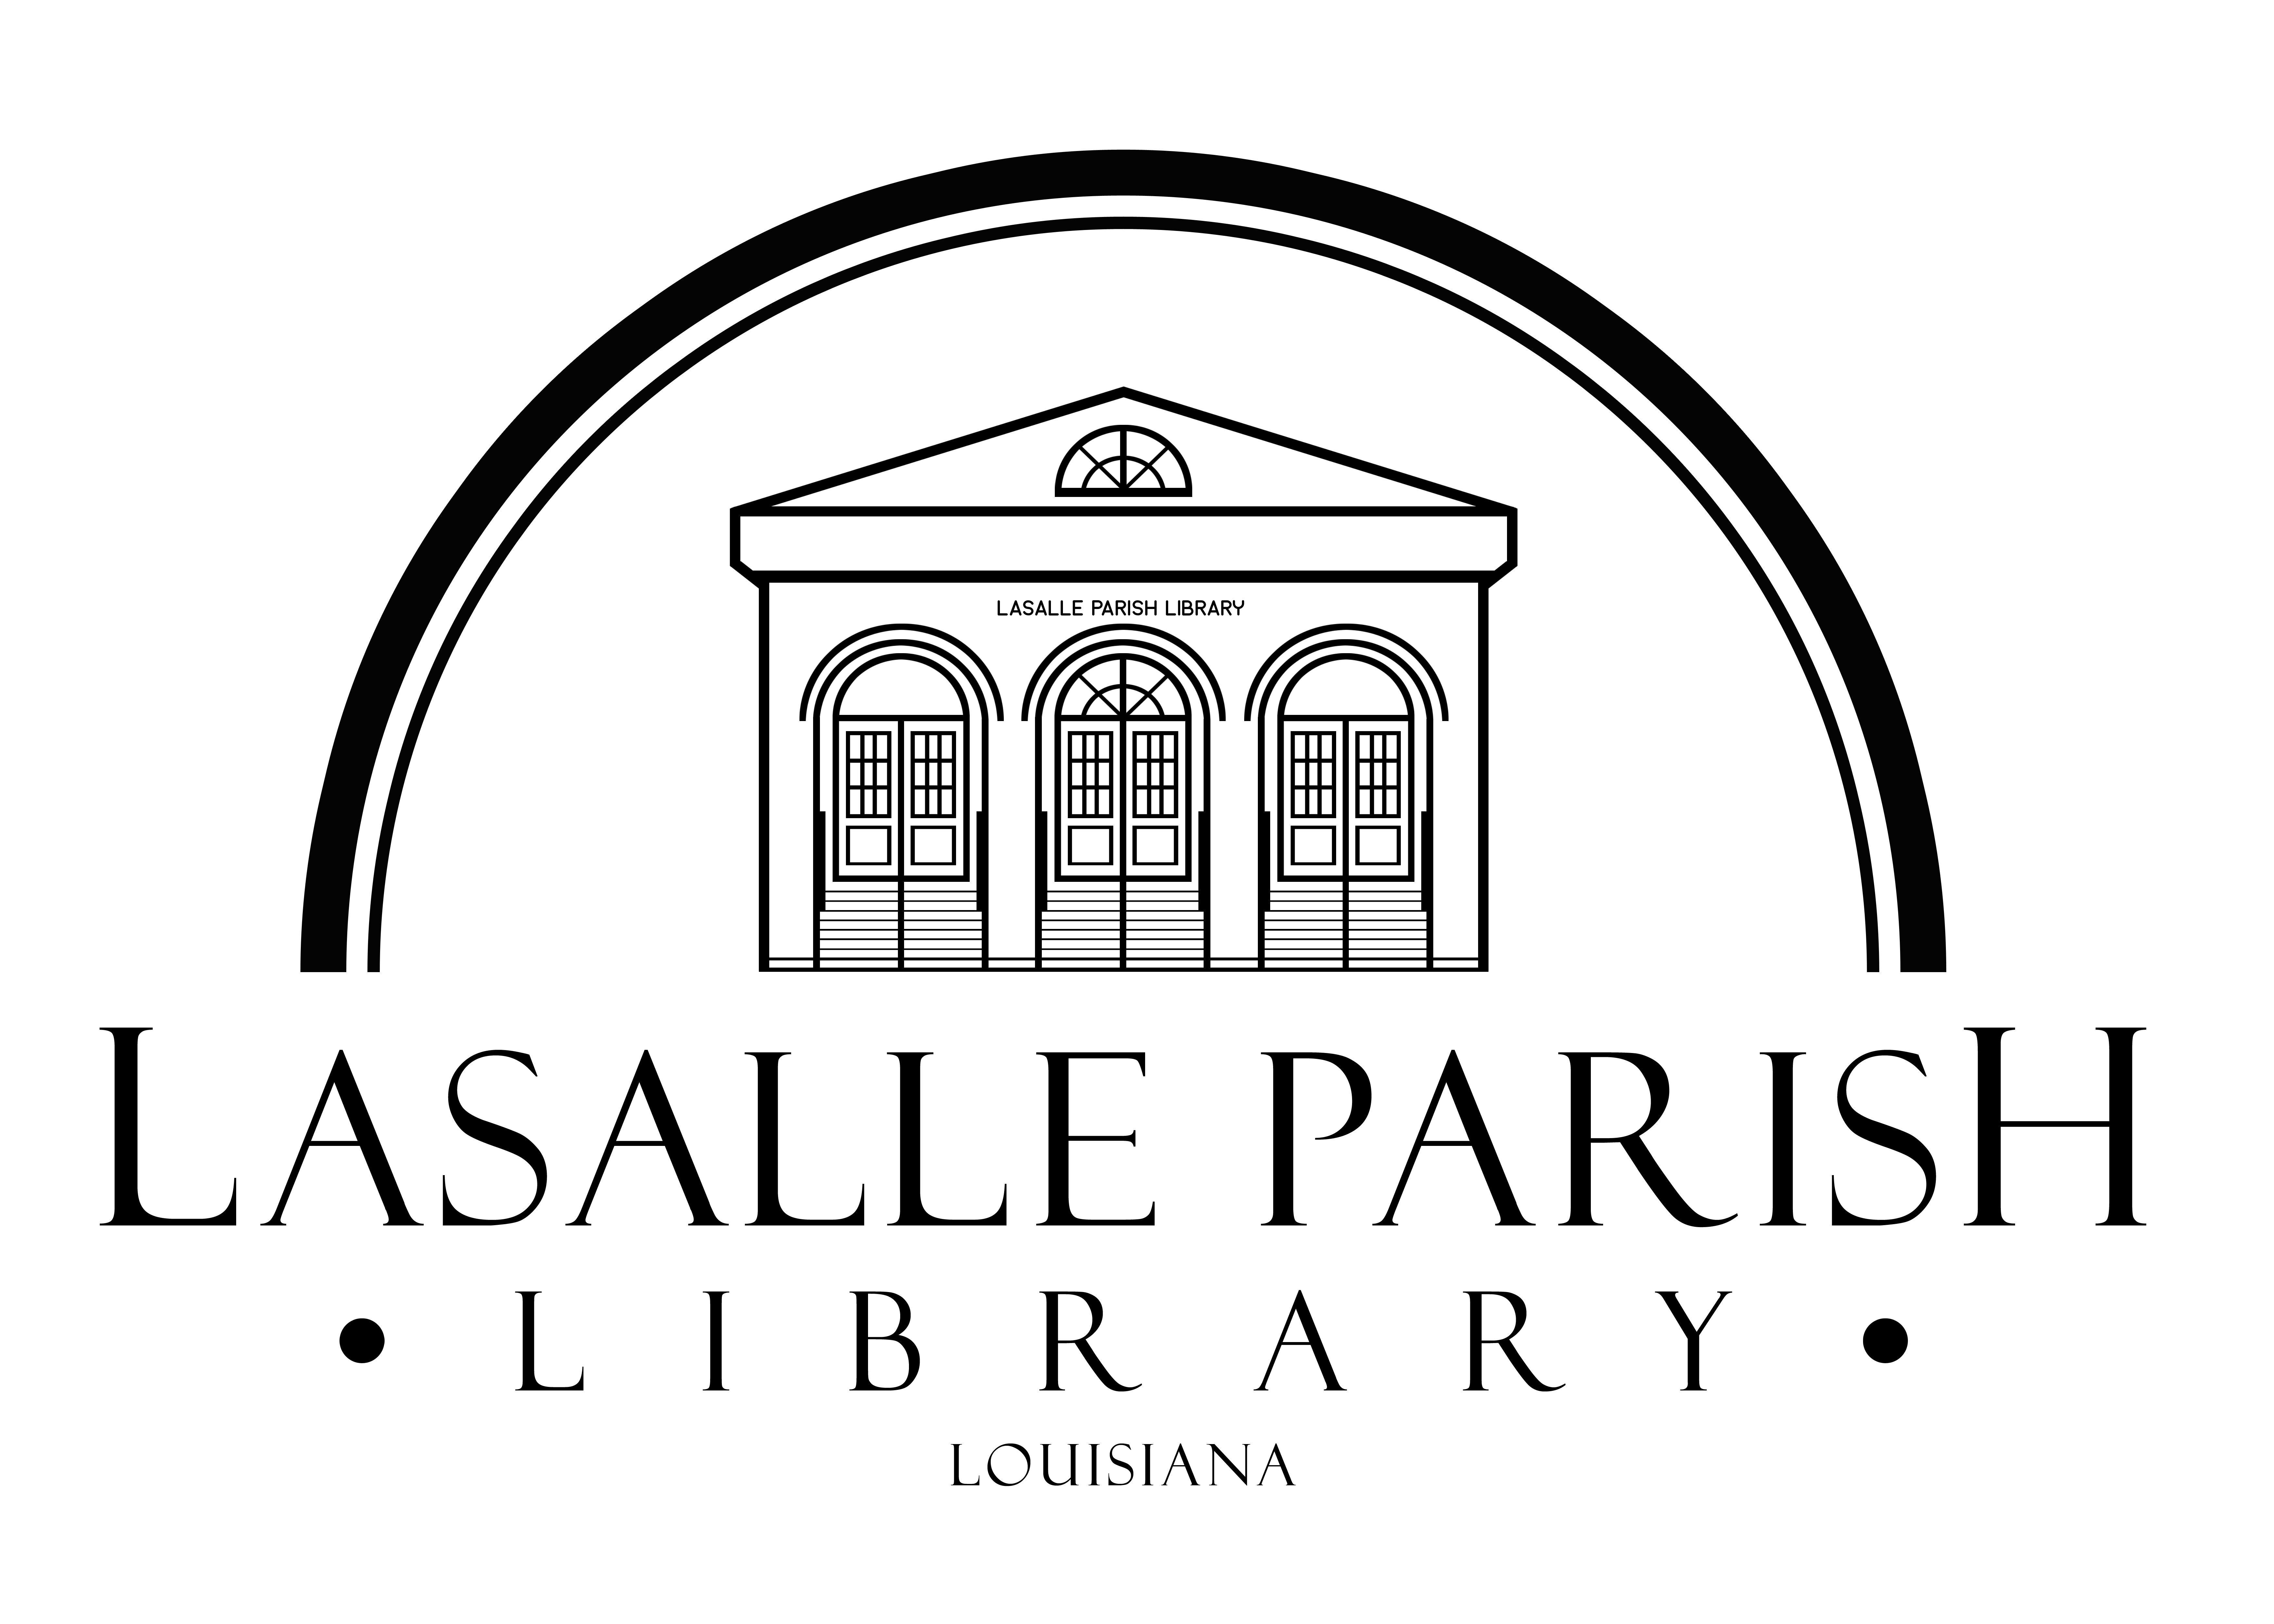 LaSalle Parish Library